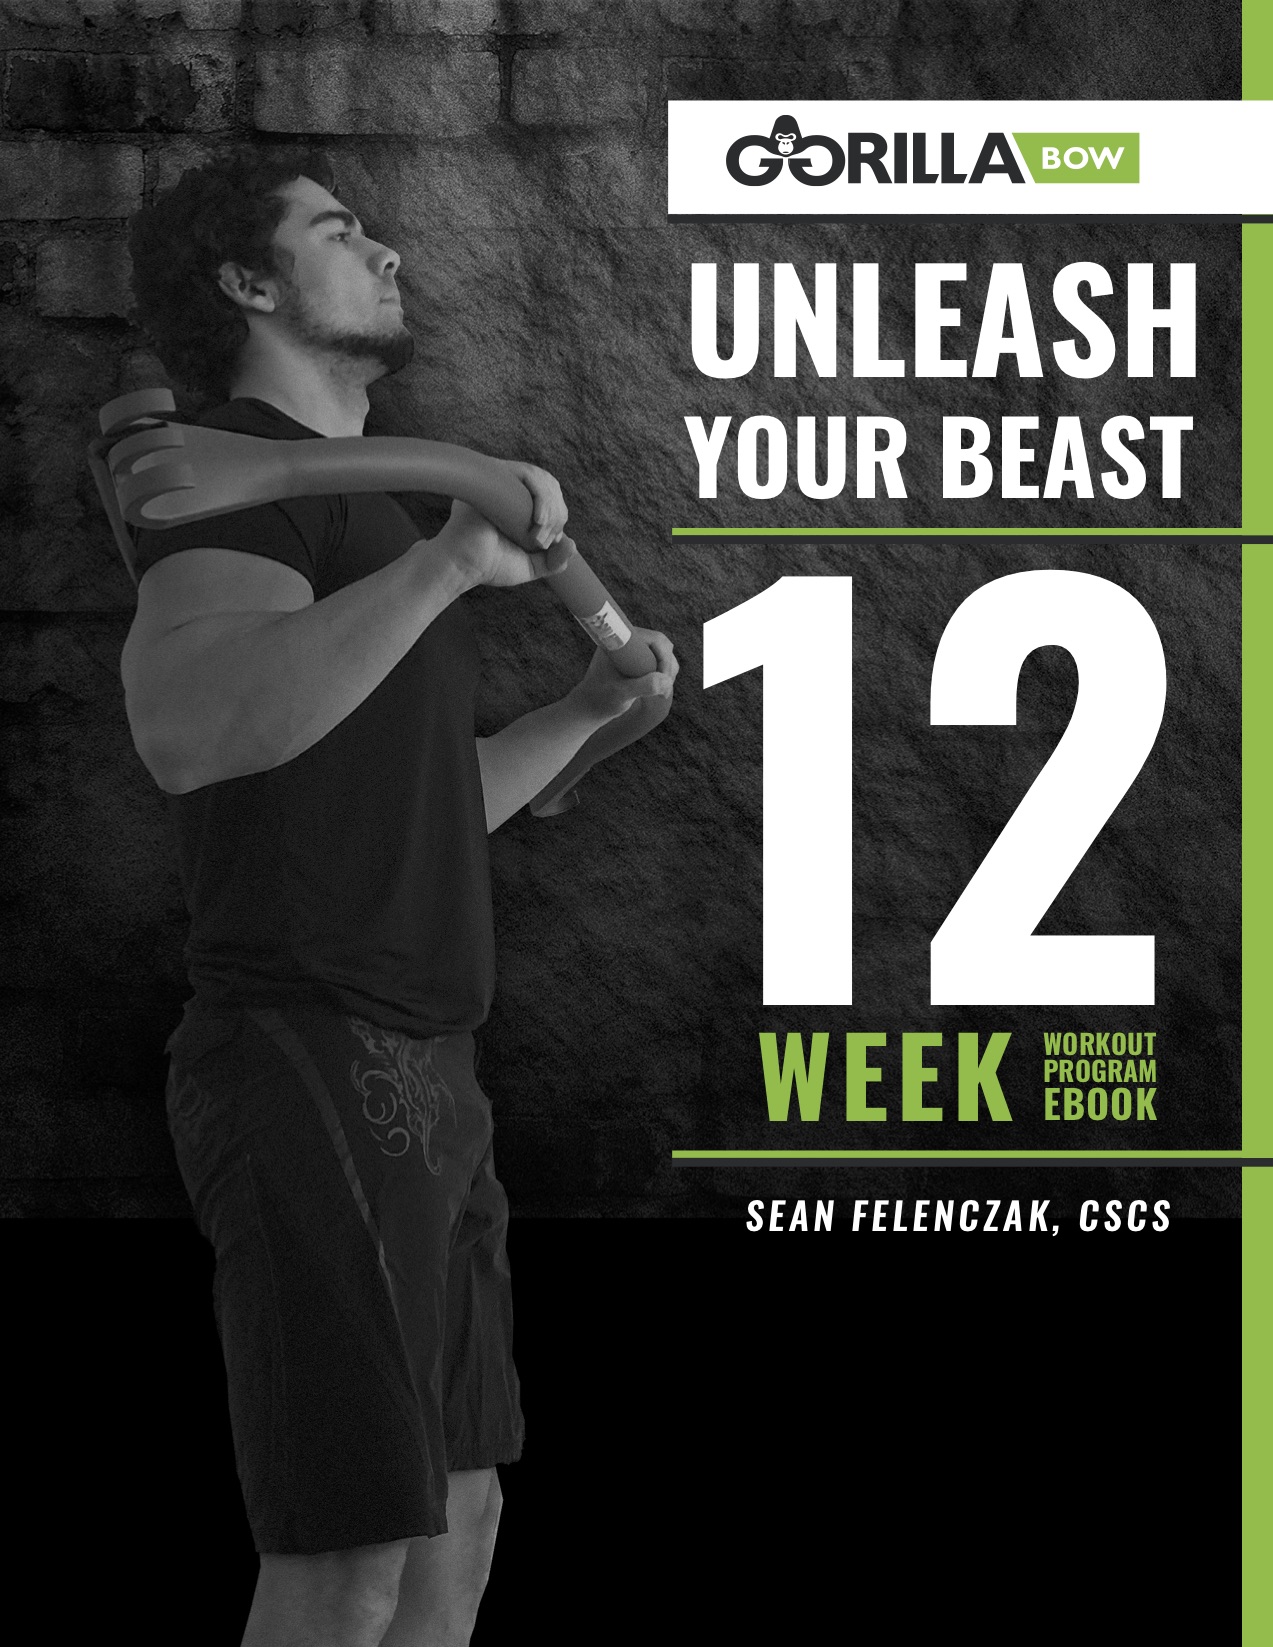 FREE: Gorilla Bow: Unleash Your Beast by Sean Felenczak